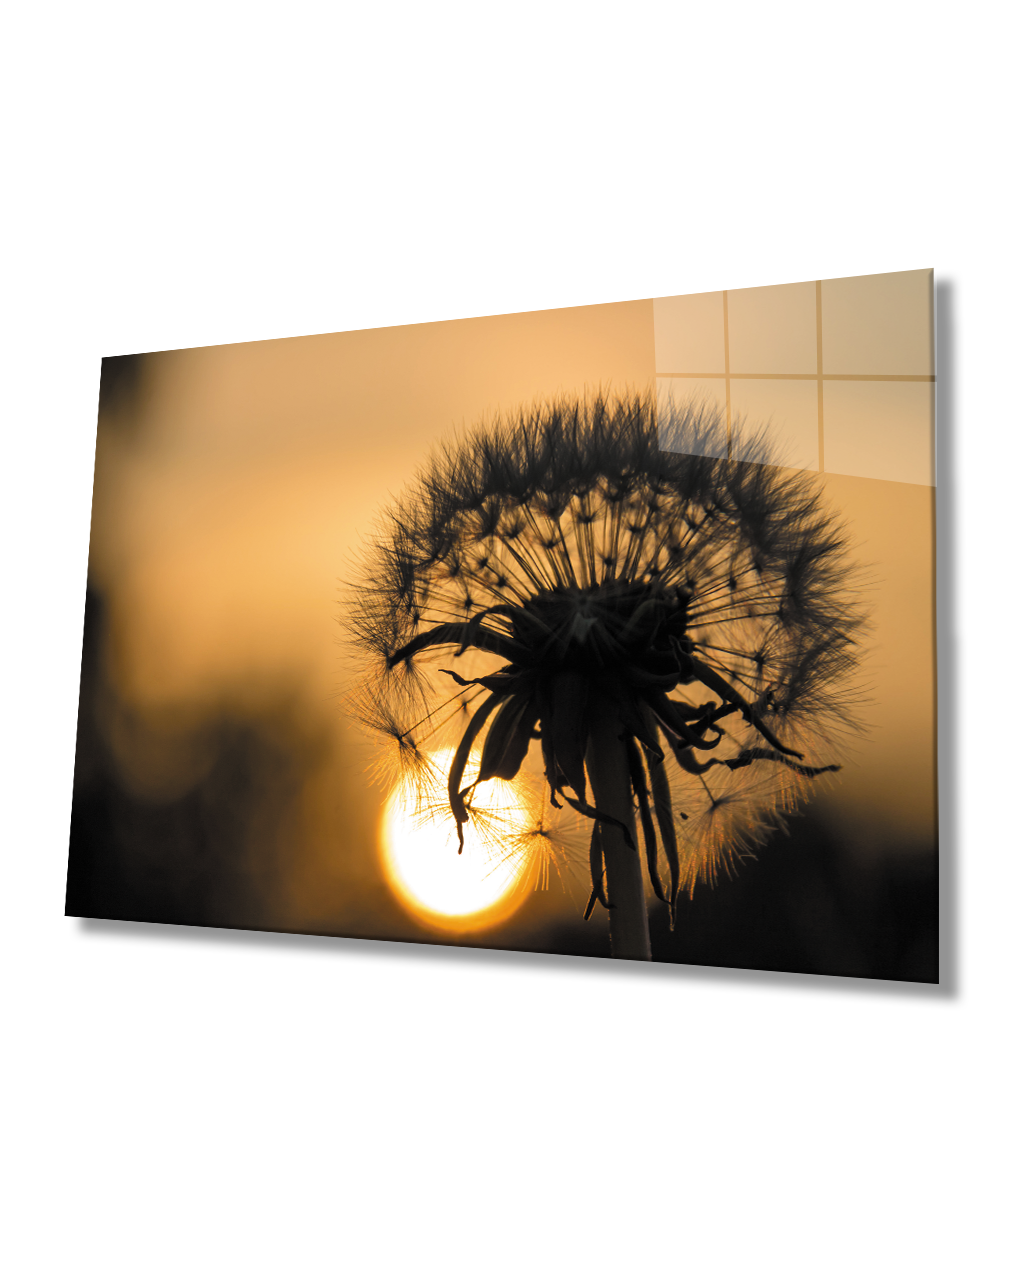 Gün Batımında Bitki  Cam Tablo  4mm Dayanıklı Temperli CamPlant Glass Table 4mm Durable Tempered Glass At Sunset